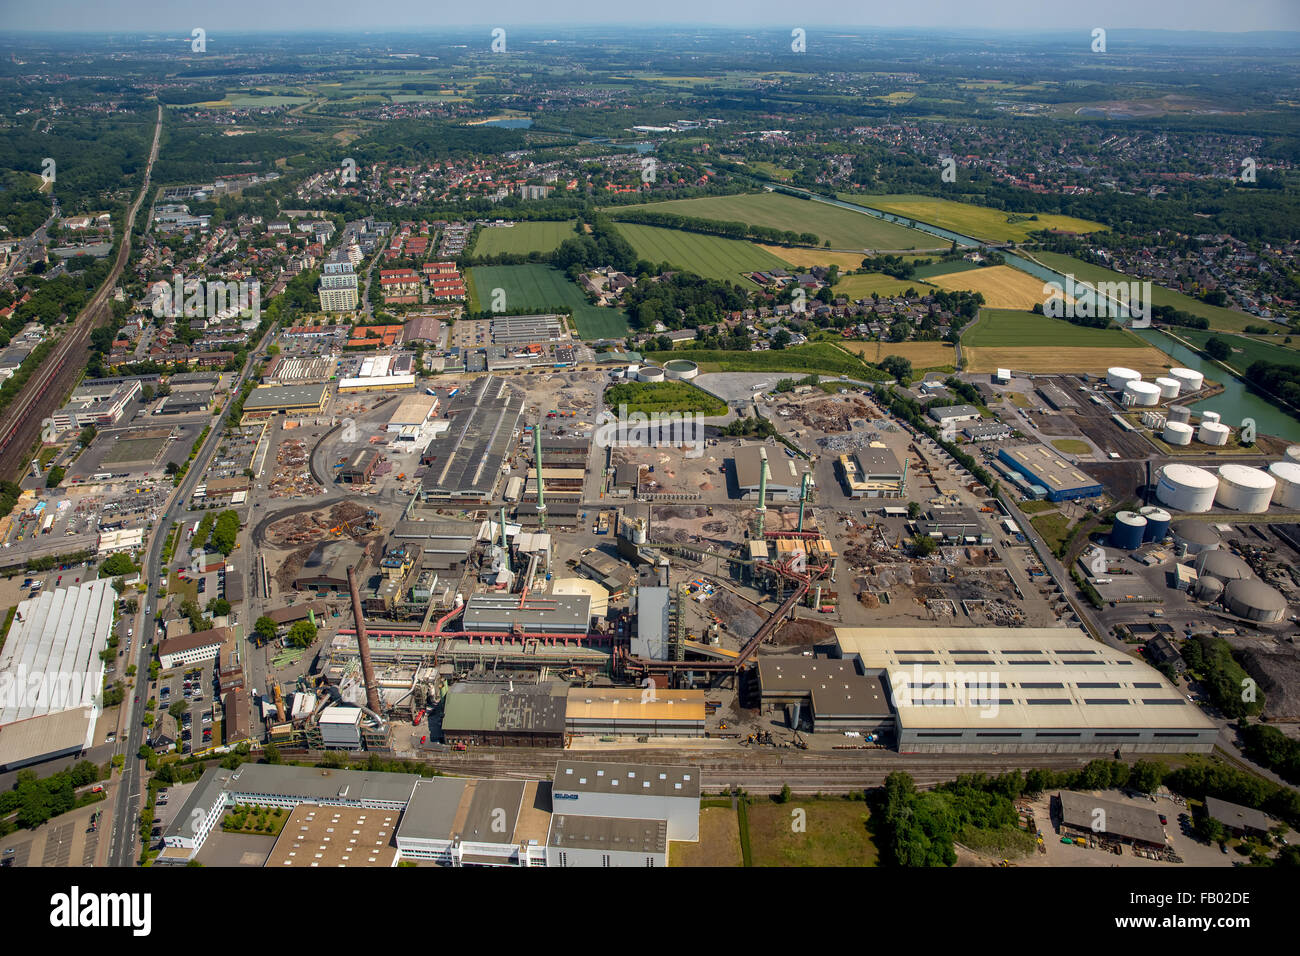 Vista aerea, rame Aurubis Road, Aurubis - Rame e riciclaggio, Aurubis è uno dei principali produttori di rame, Luenen, Foto Stock